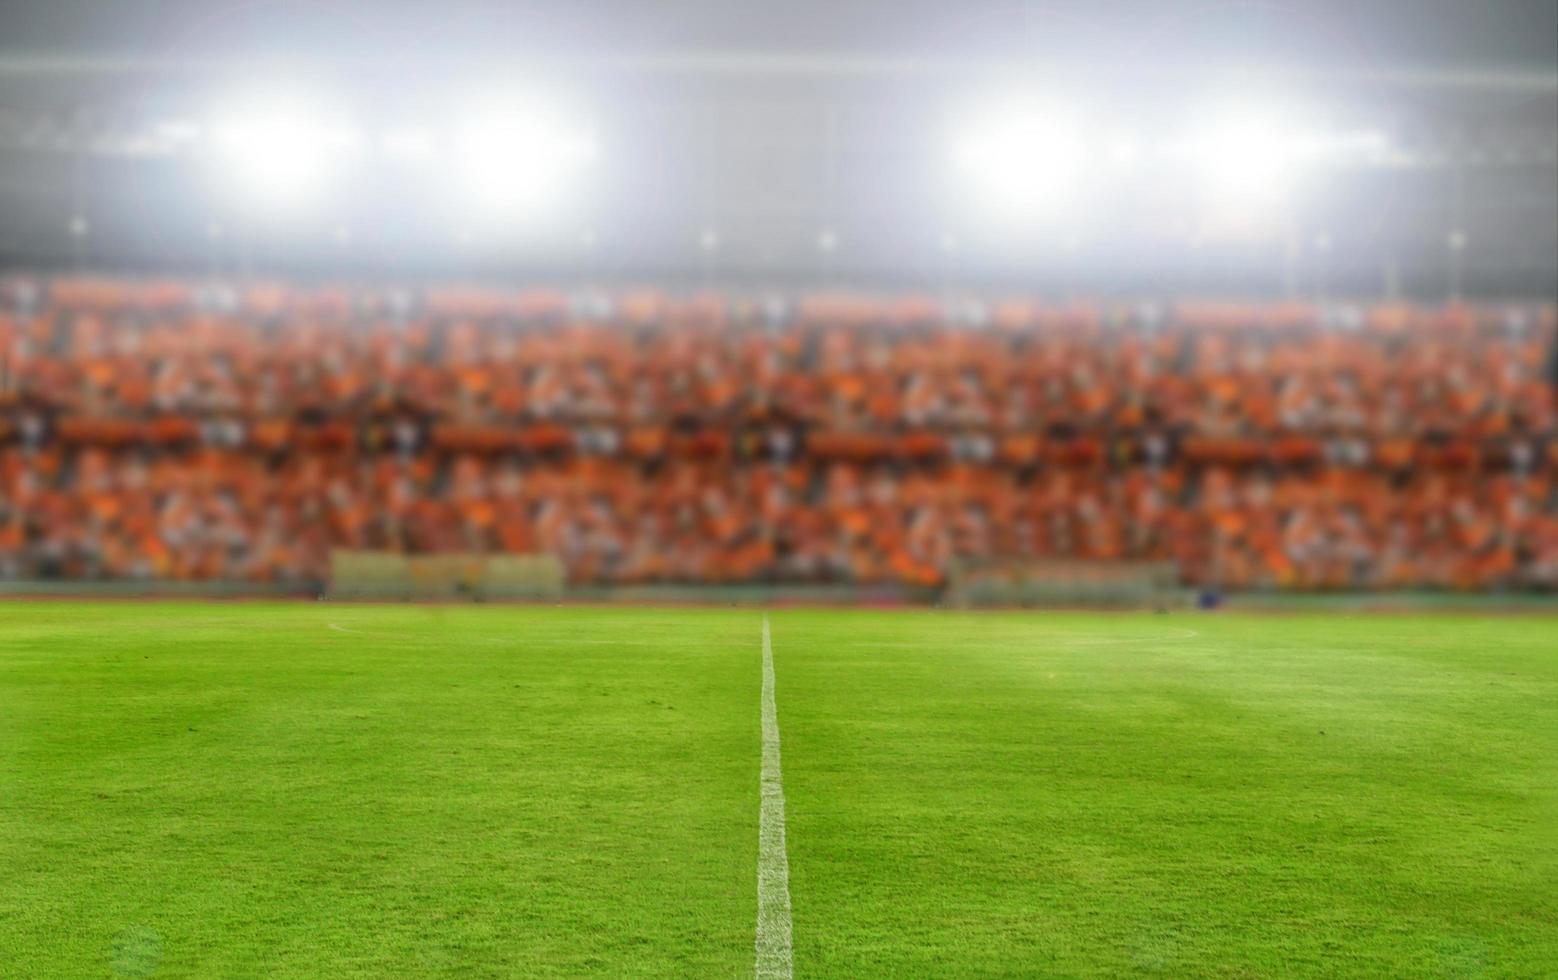 Football stadium, soccer field background photo